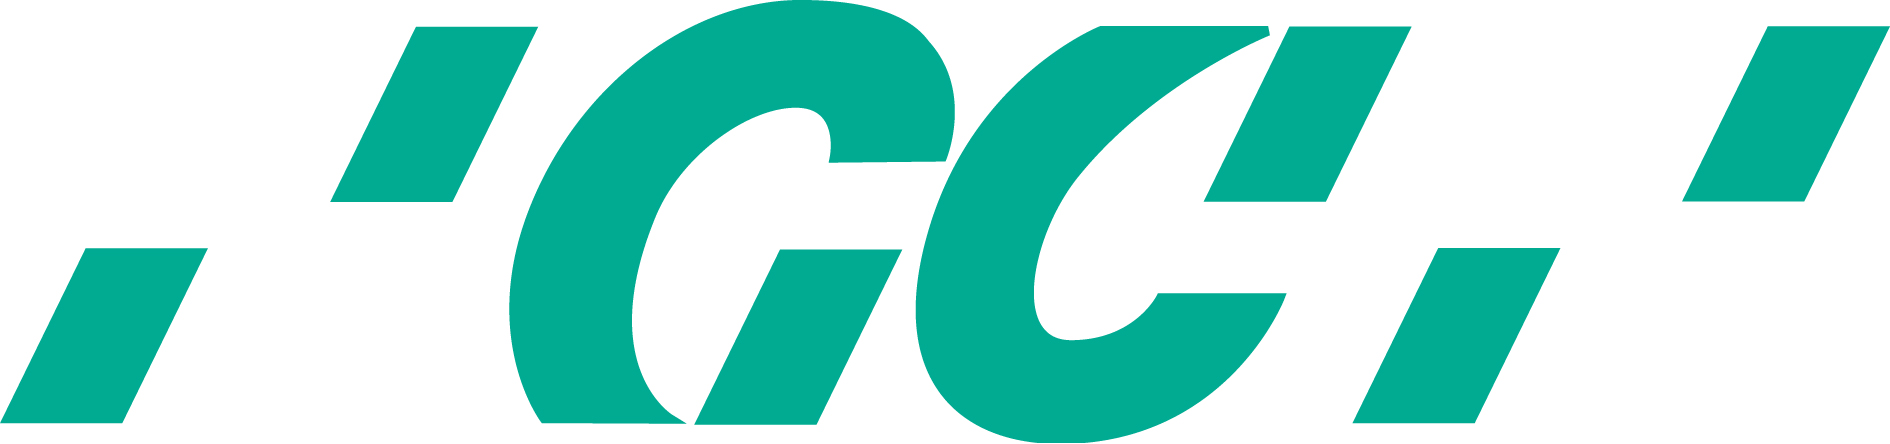 GC Logo - About Us